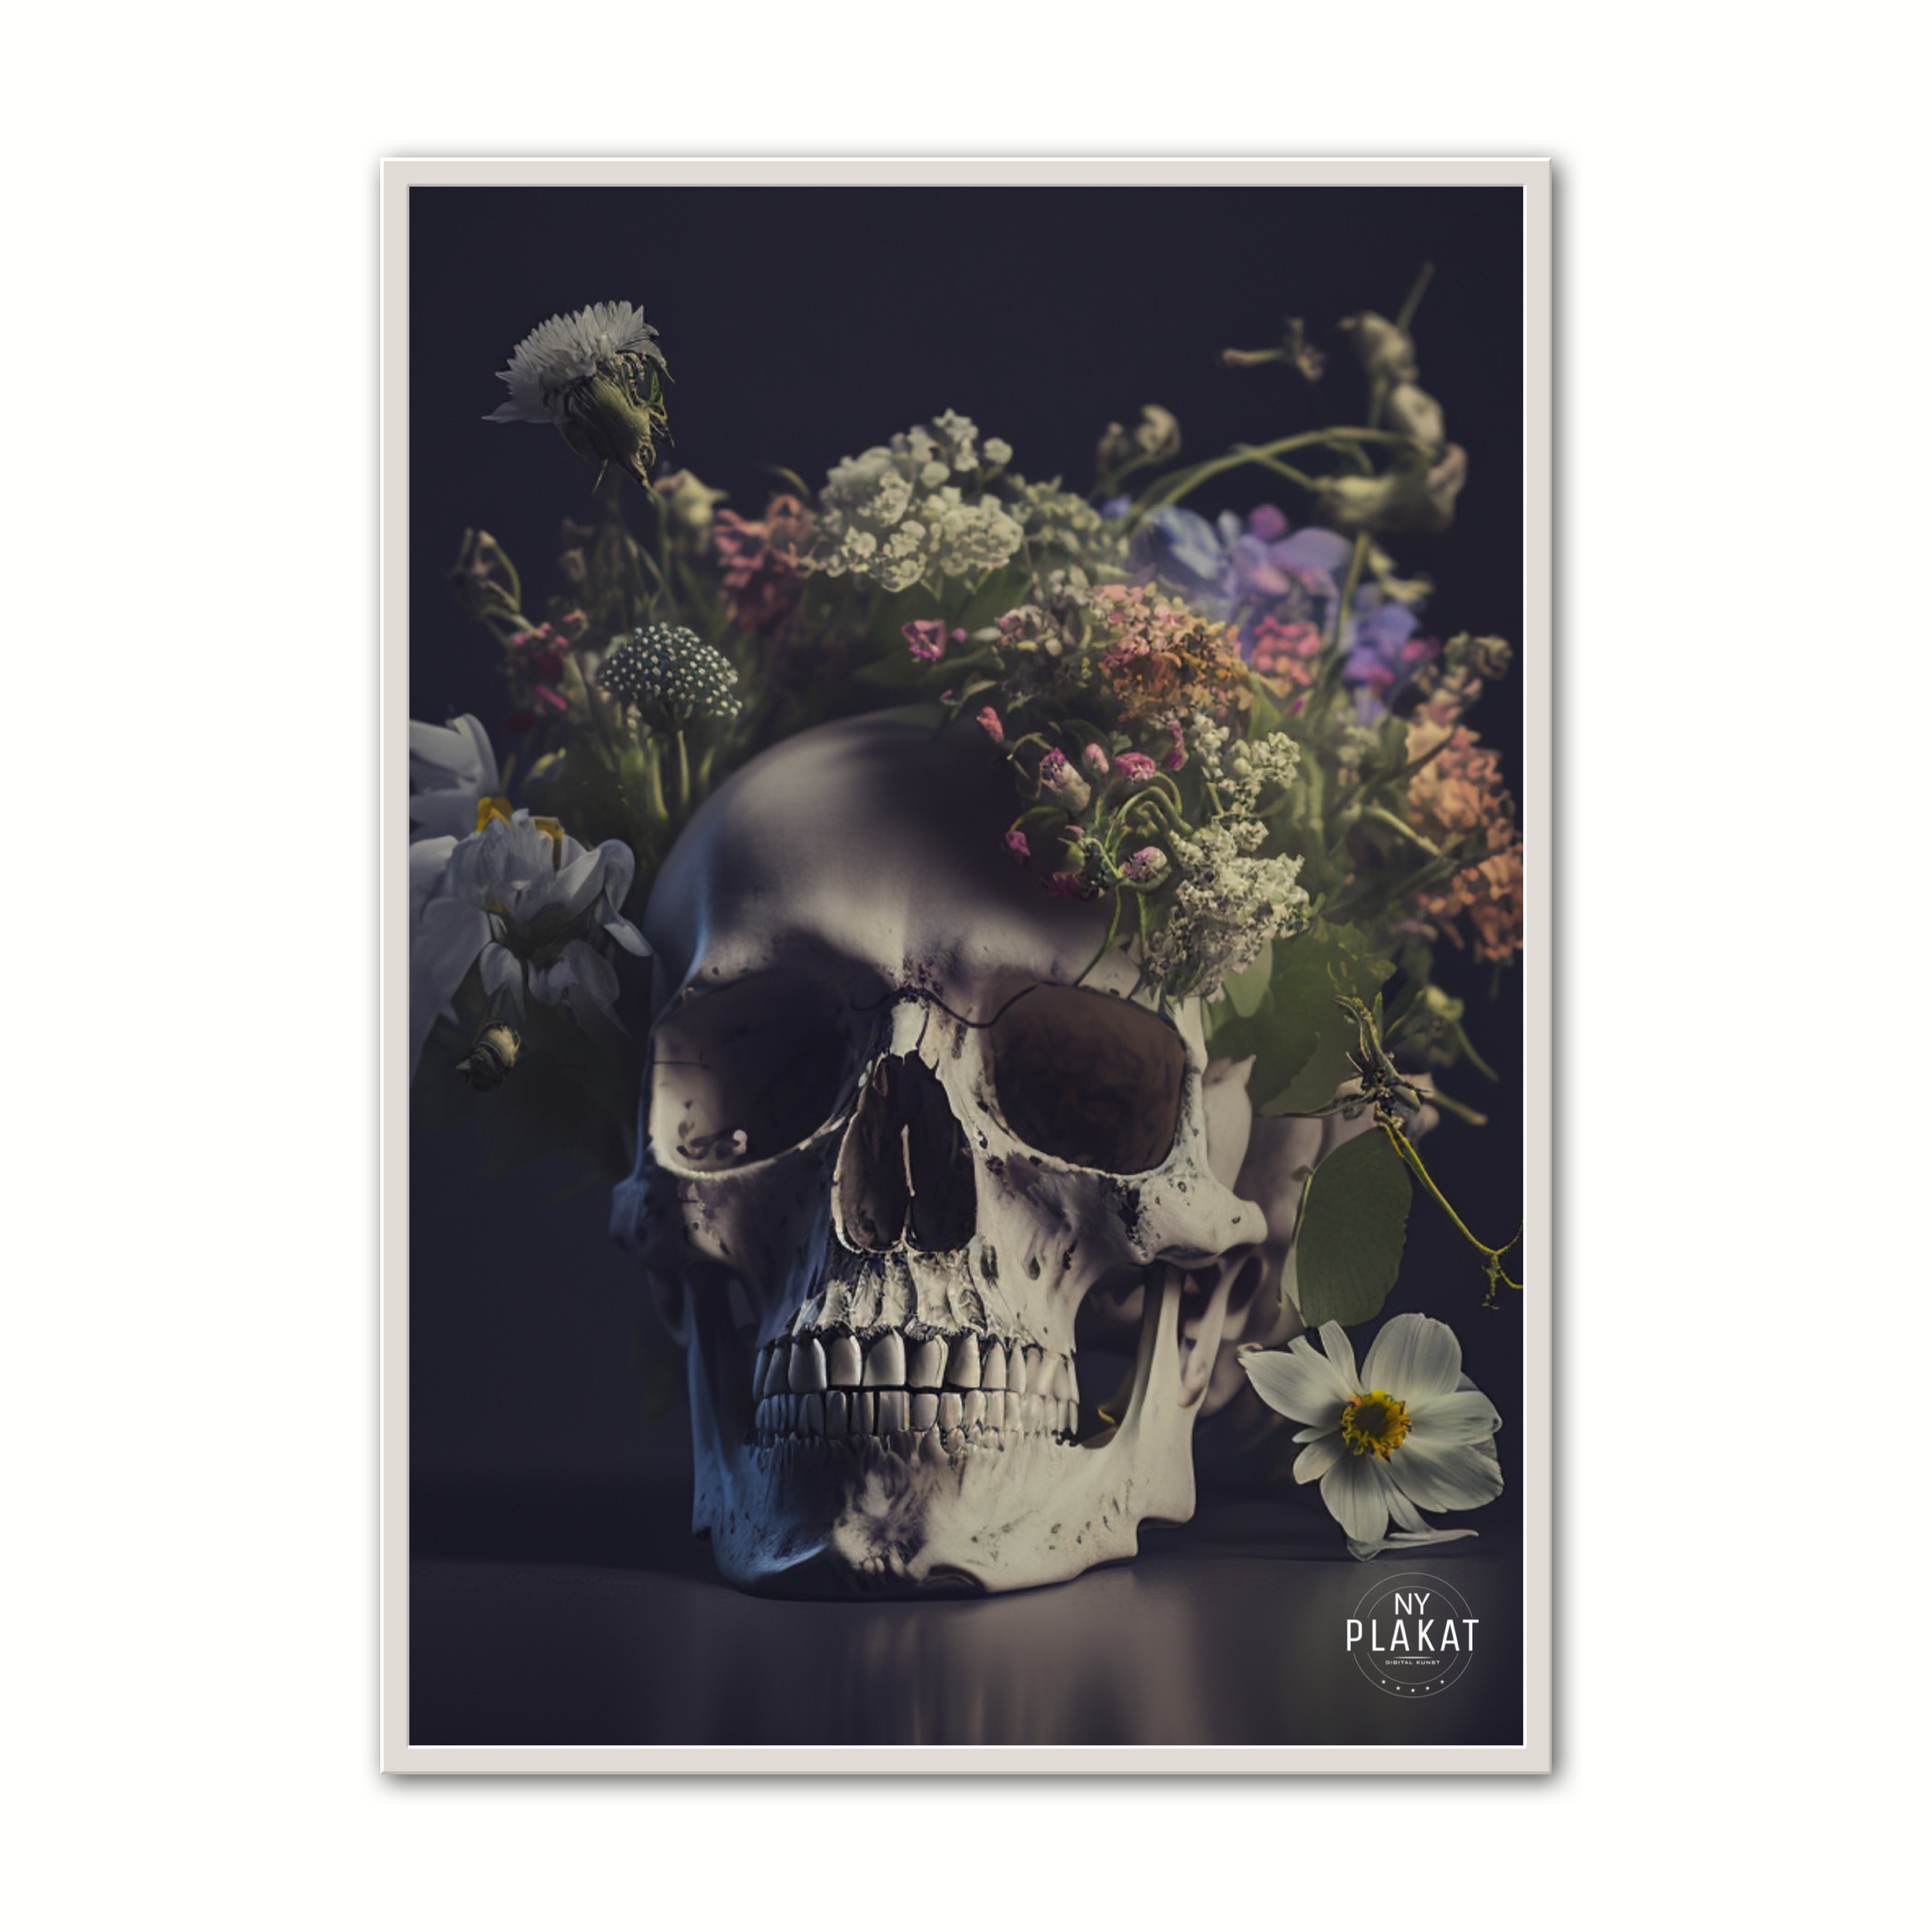 Se Plakat med Skull With Flowers No. 3 21 x 29,7 cm (A4) hos Nyplakat.dk